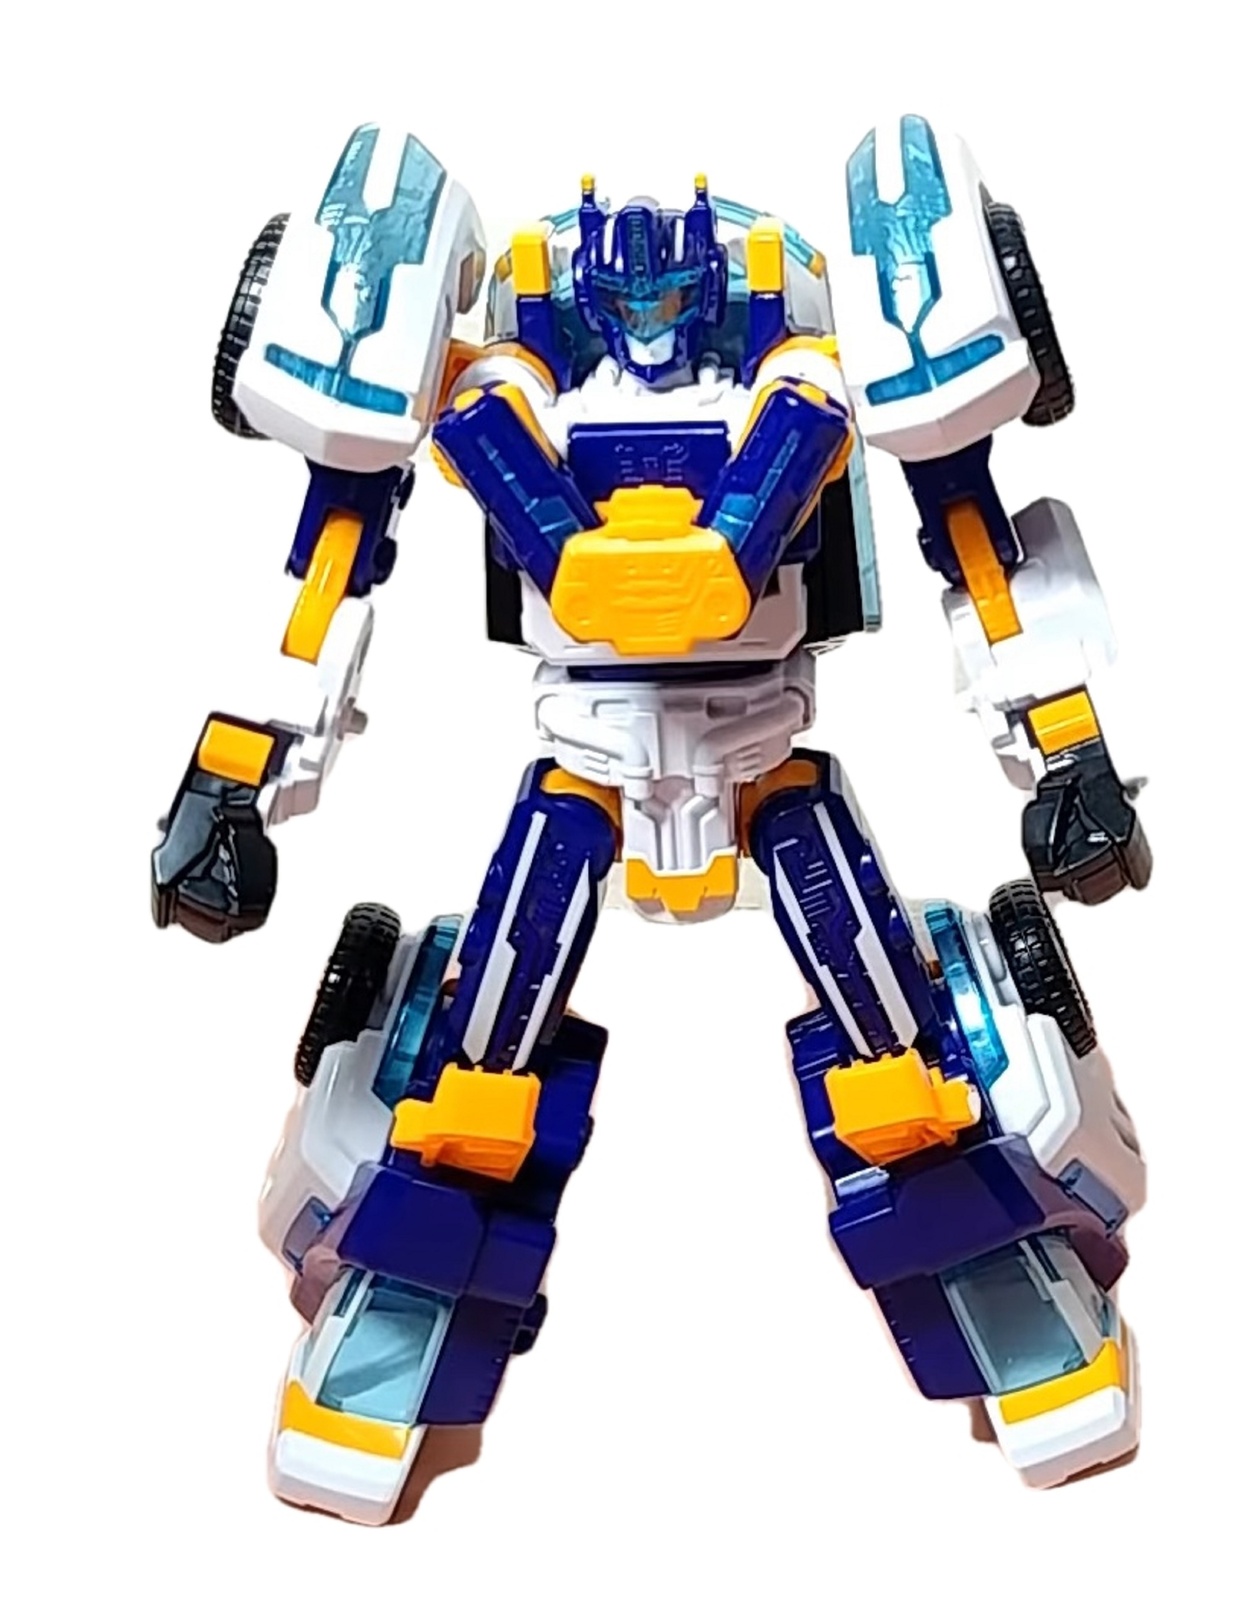  Tobot V  Lightning Transformation Action Figure Robot  